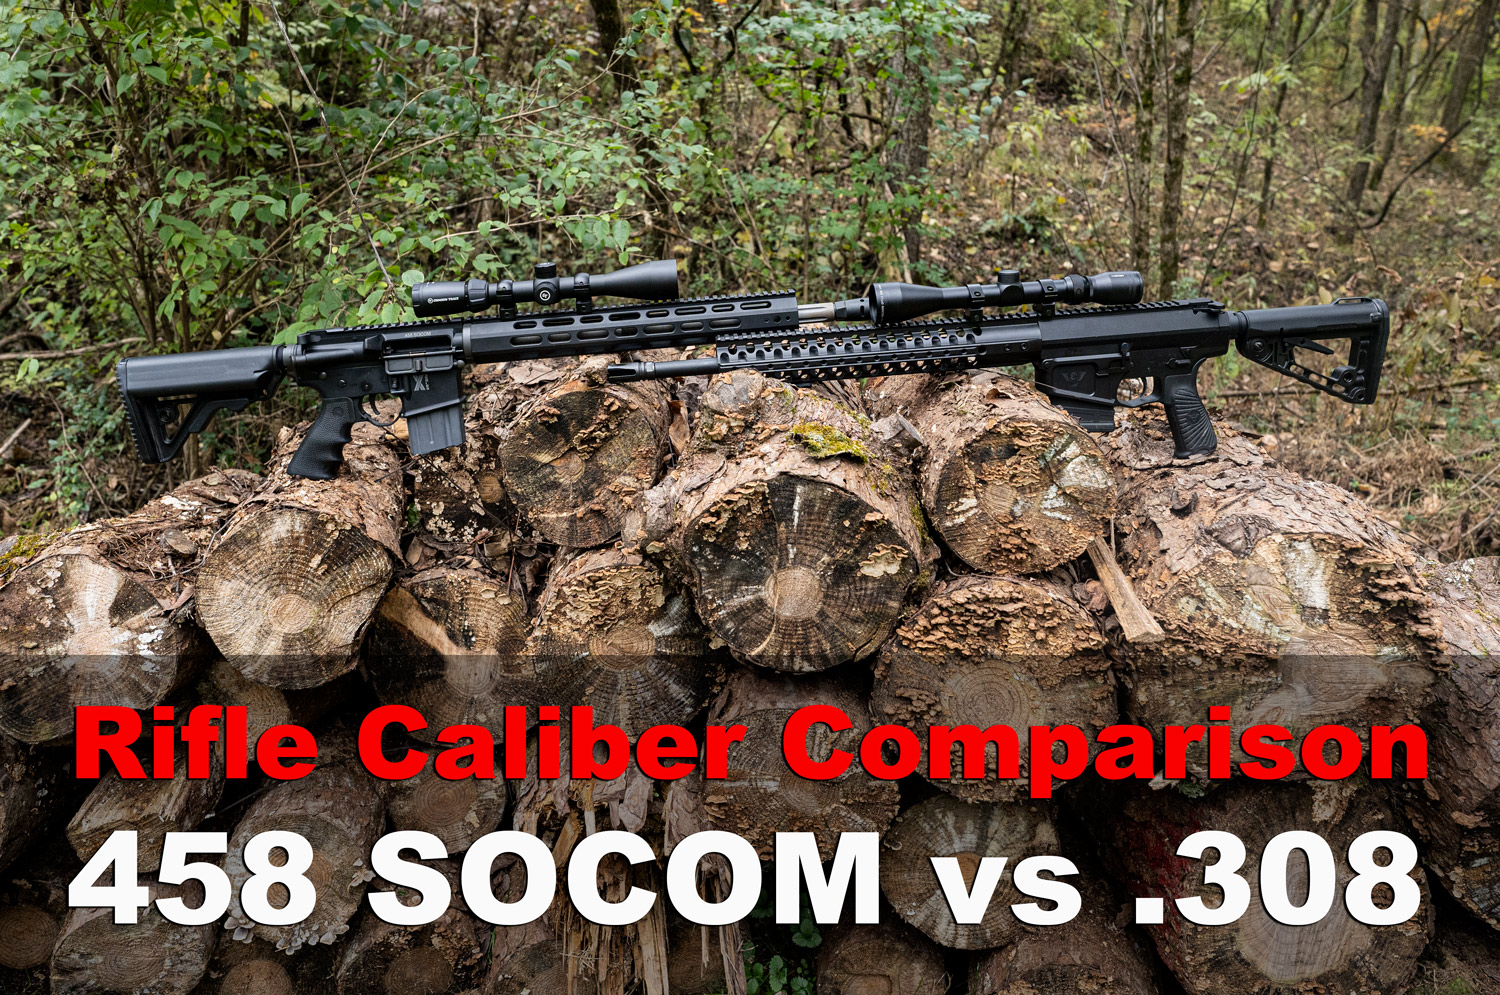 458 SOCOM vs 308 rifles at a shooting range